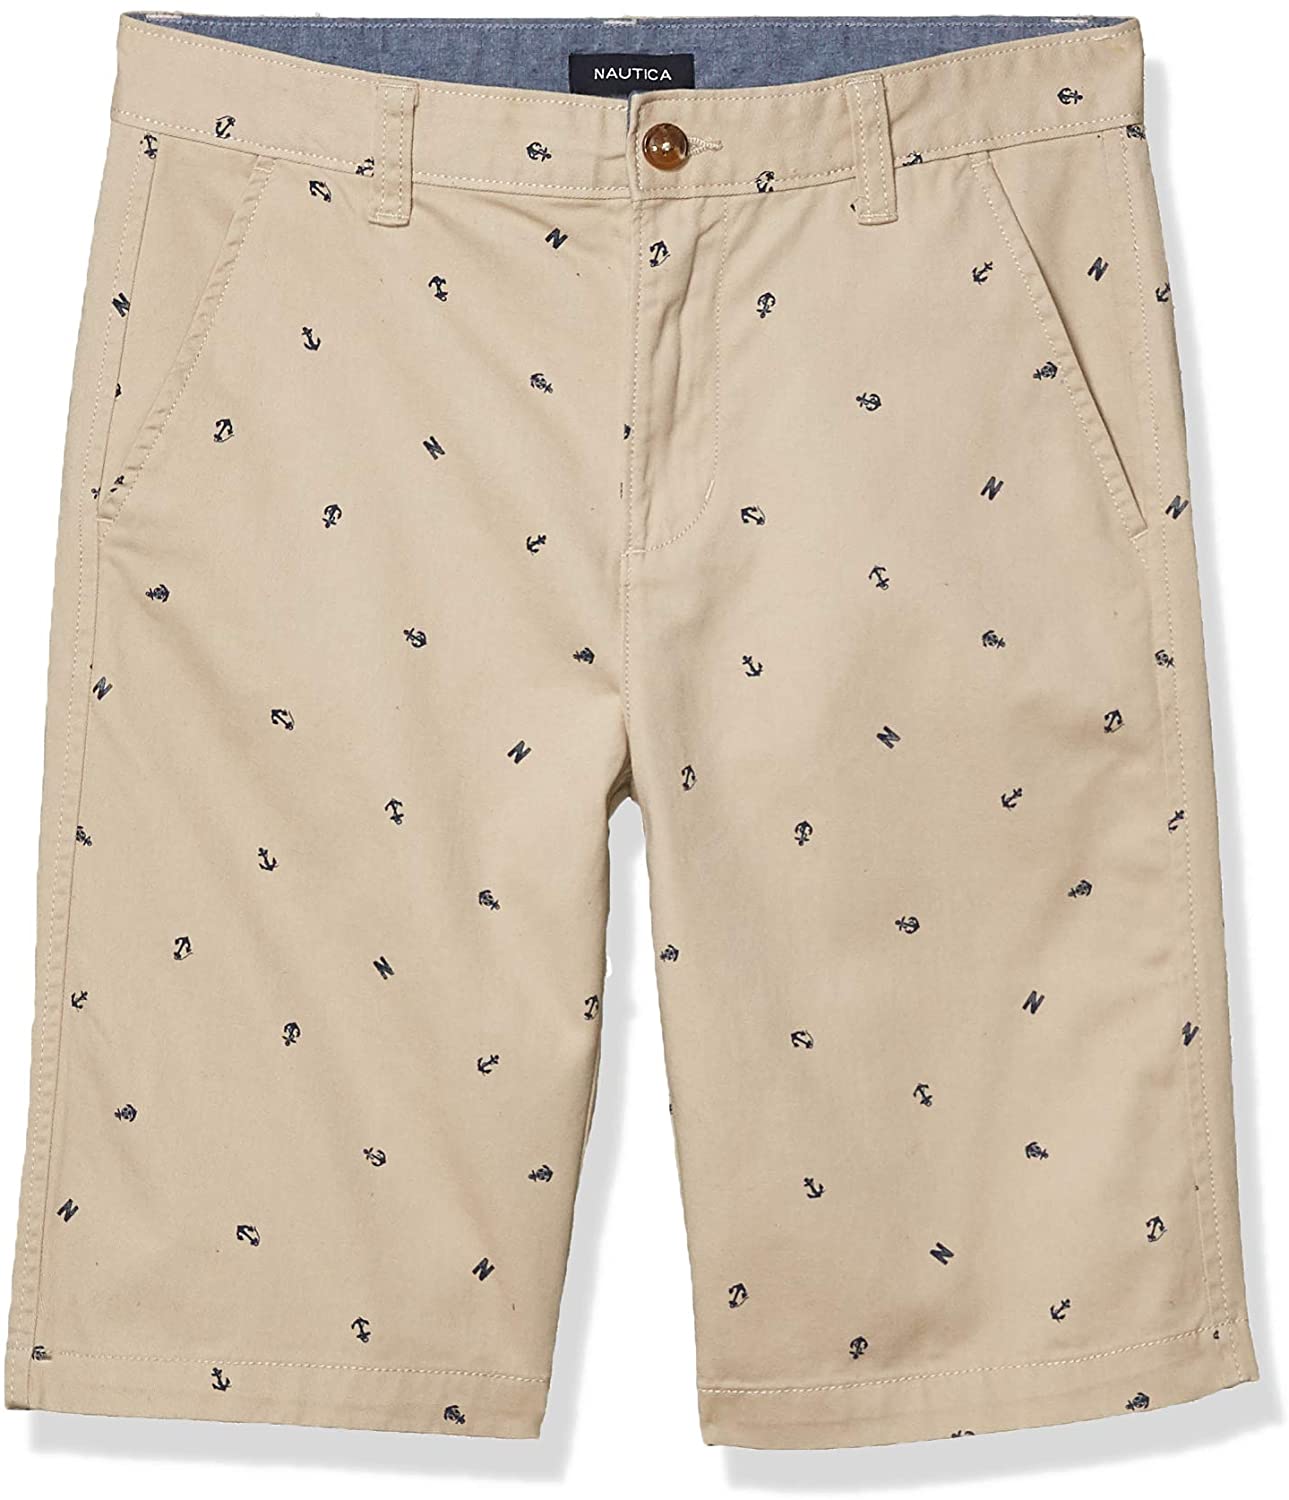 Boys Nautica $36.50 Assorted Uniform/Casual Flat Front Slim Fit Shorts Size 8-16 